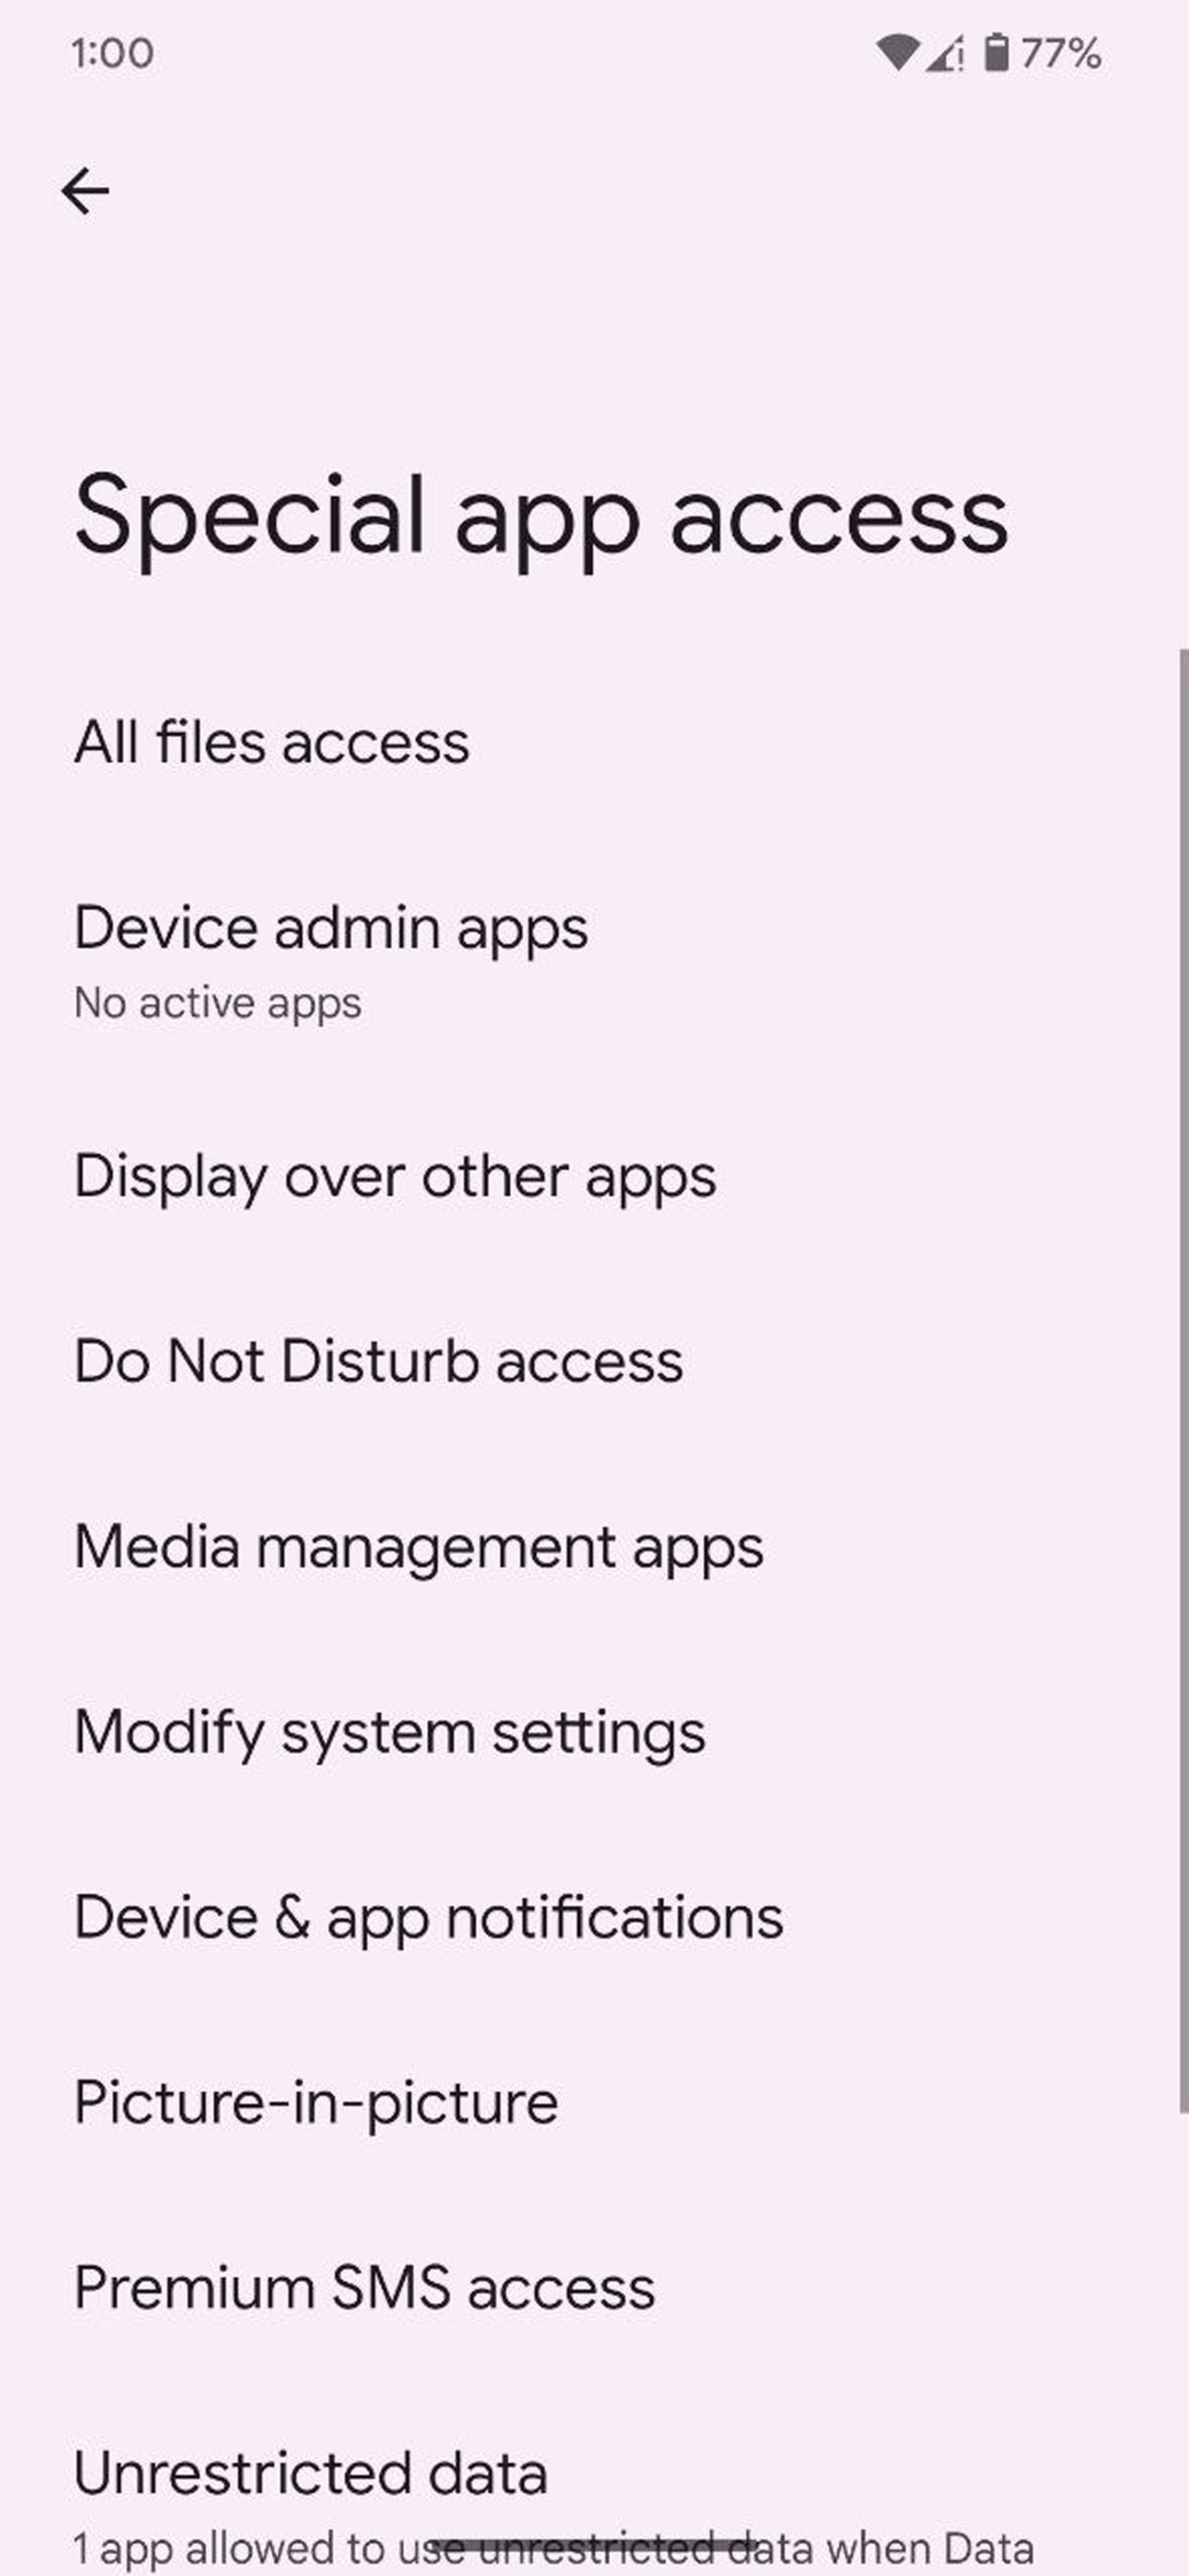 تنظیمات Special app access